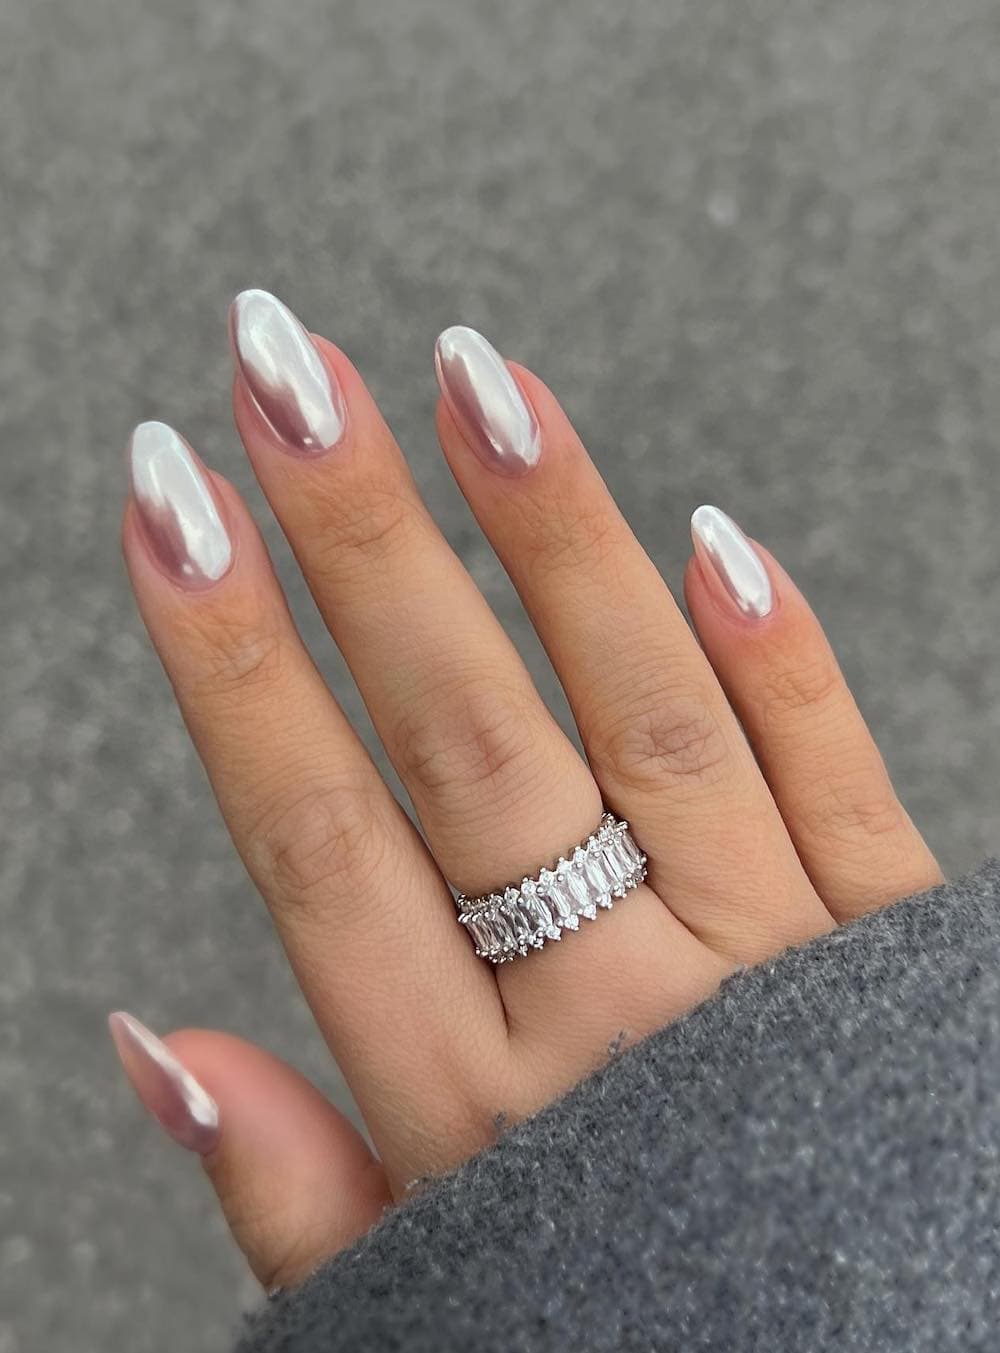 long almond nails with chrome polish